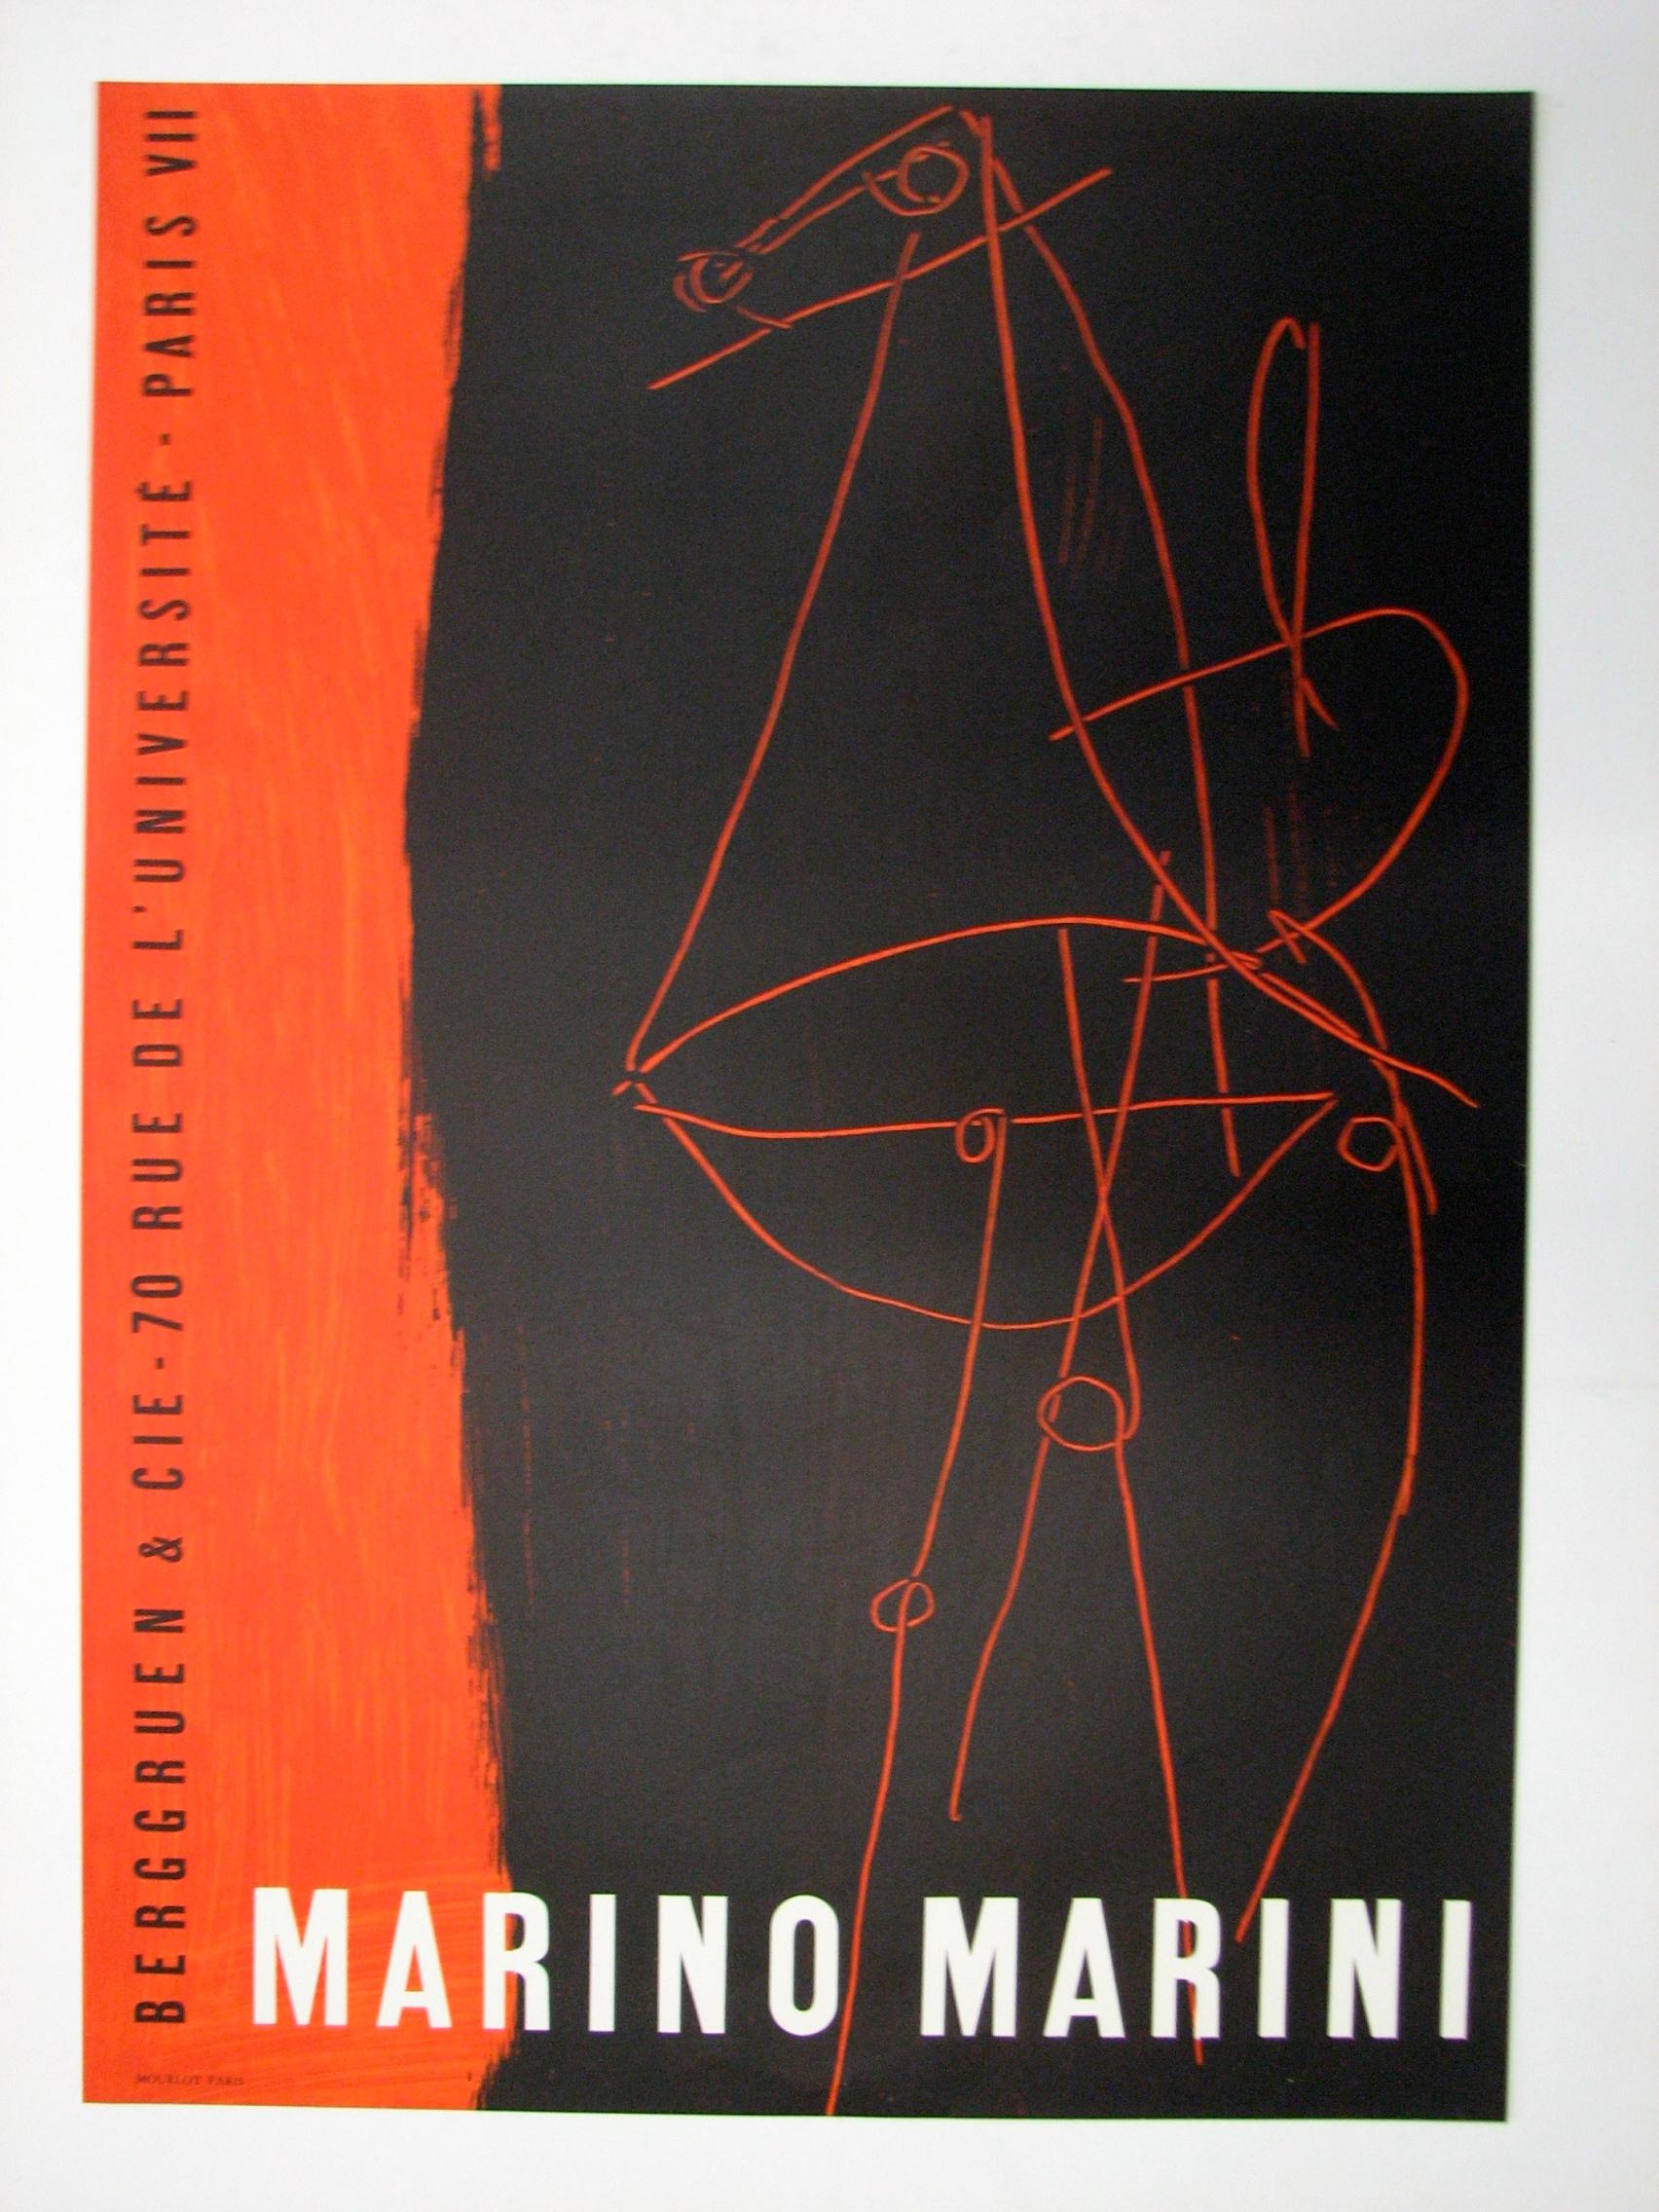 Composition BERGGRUEN AND CIE, 1955 par Marino Marini, 1955